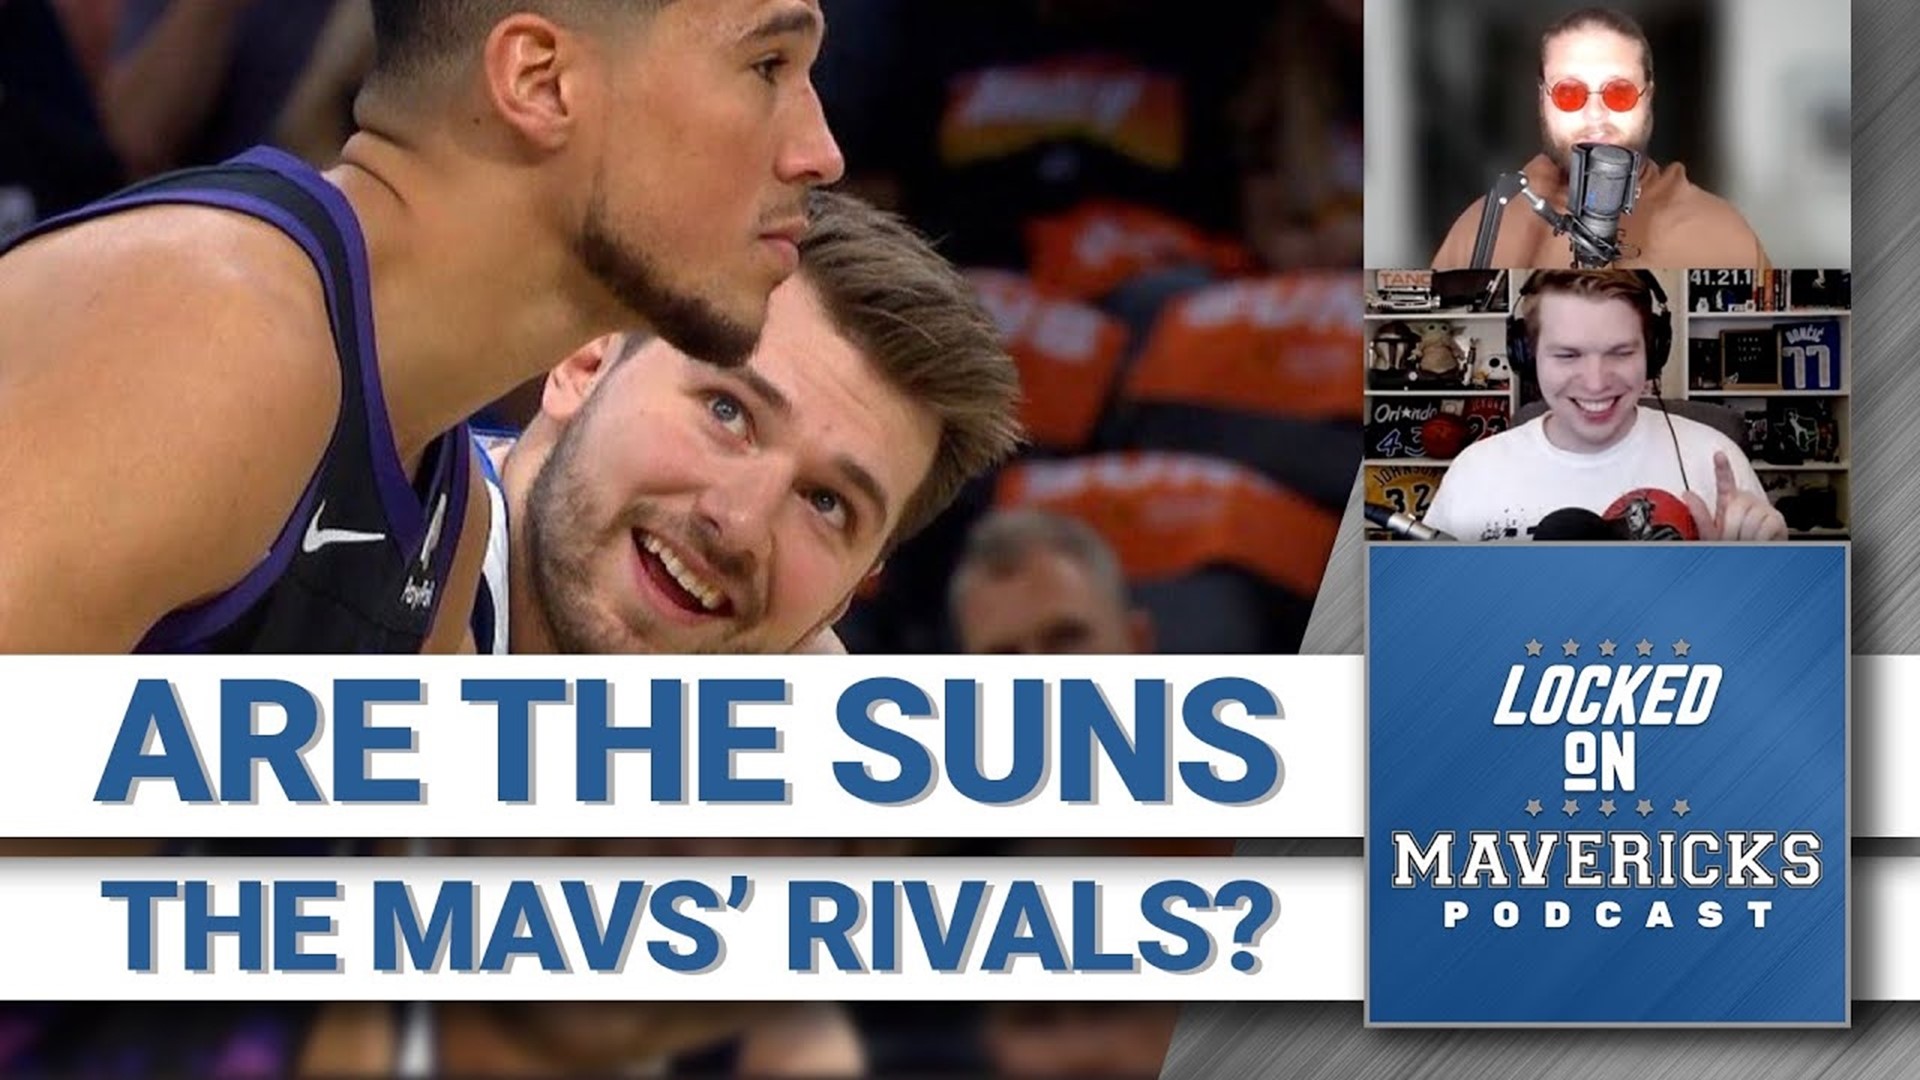 The Dallas Mavericks open the 2022-23 NBA season at the Phoenix Suns. Are Luka Doncic & Devin Booker making the Mavs & Suns rivals?